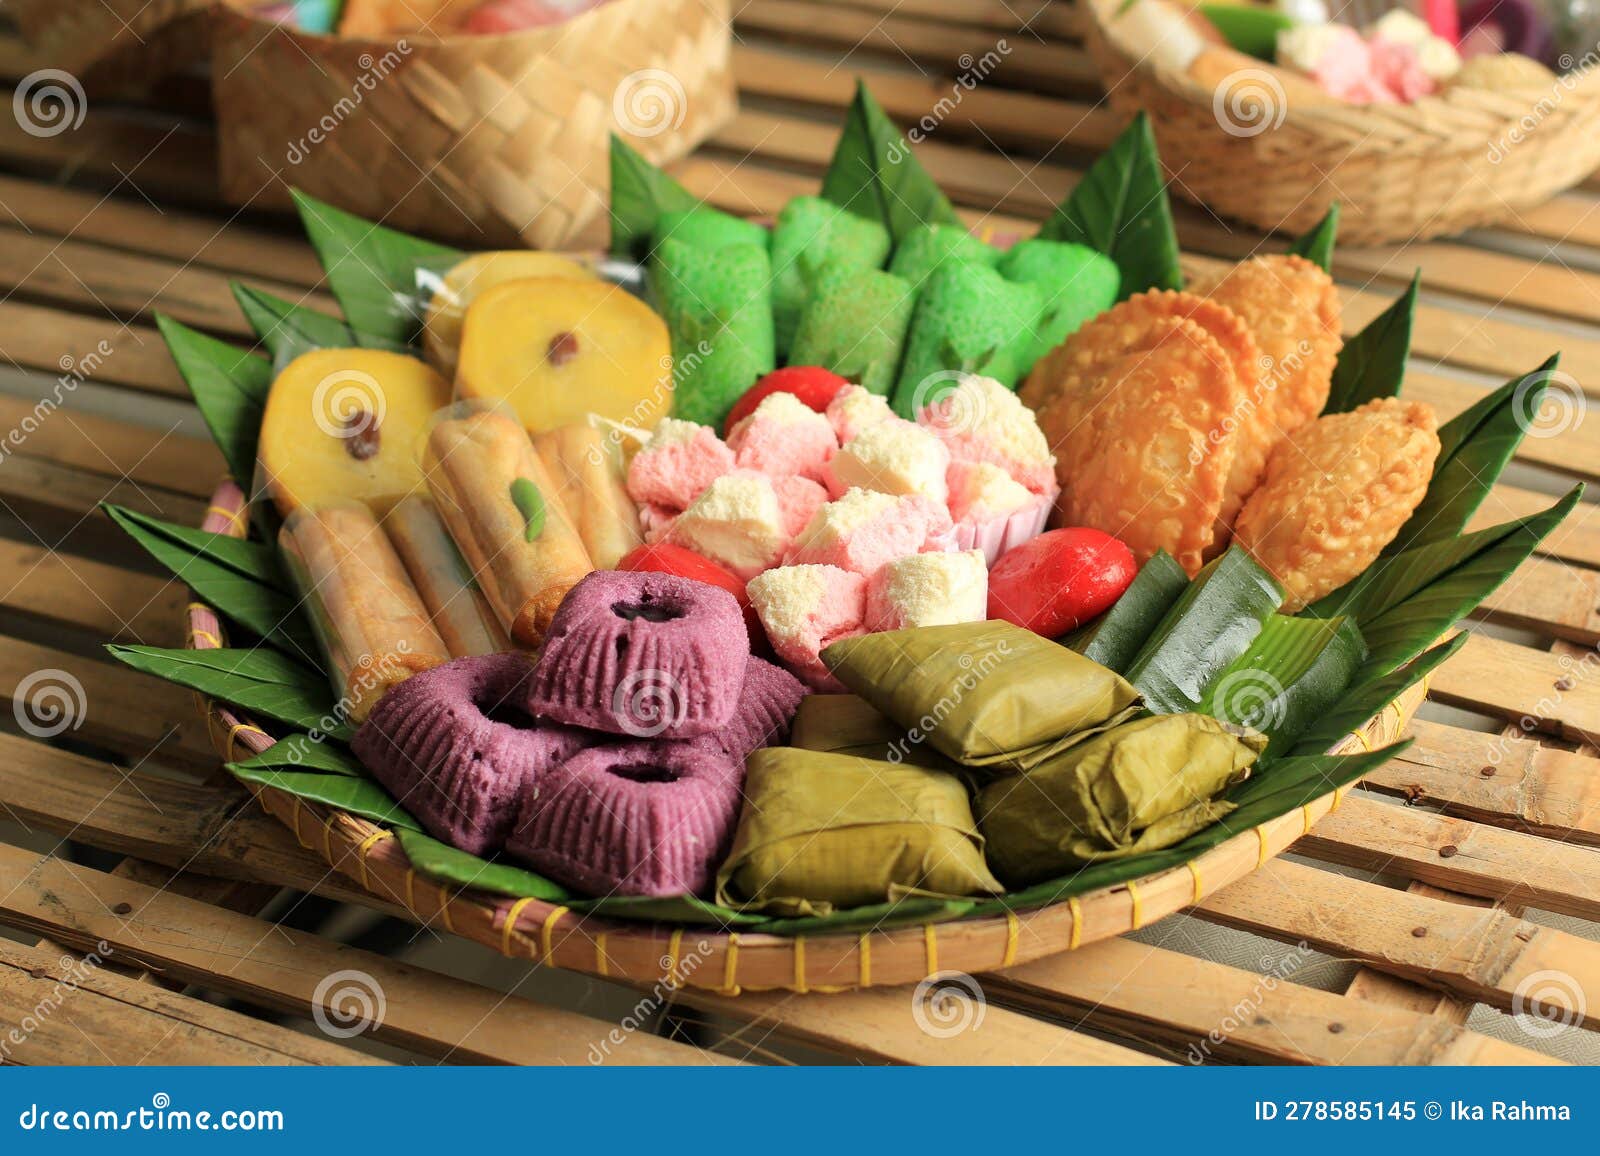 Kue Basah, Jajan Pasar Tampah Stock Image - Image of traditional ...